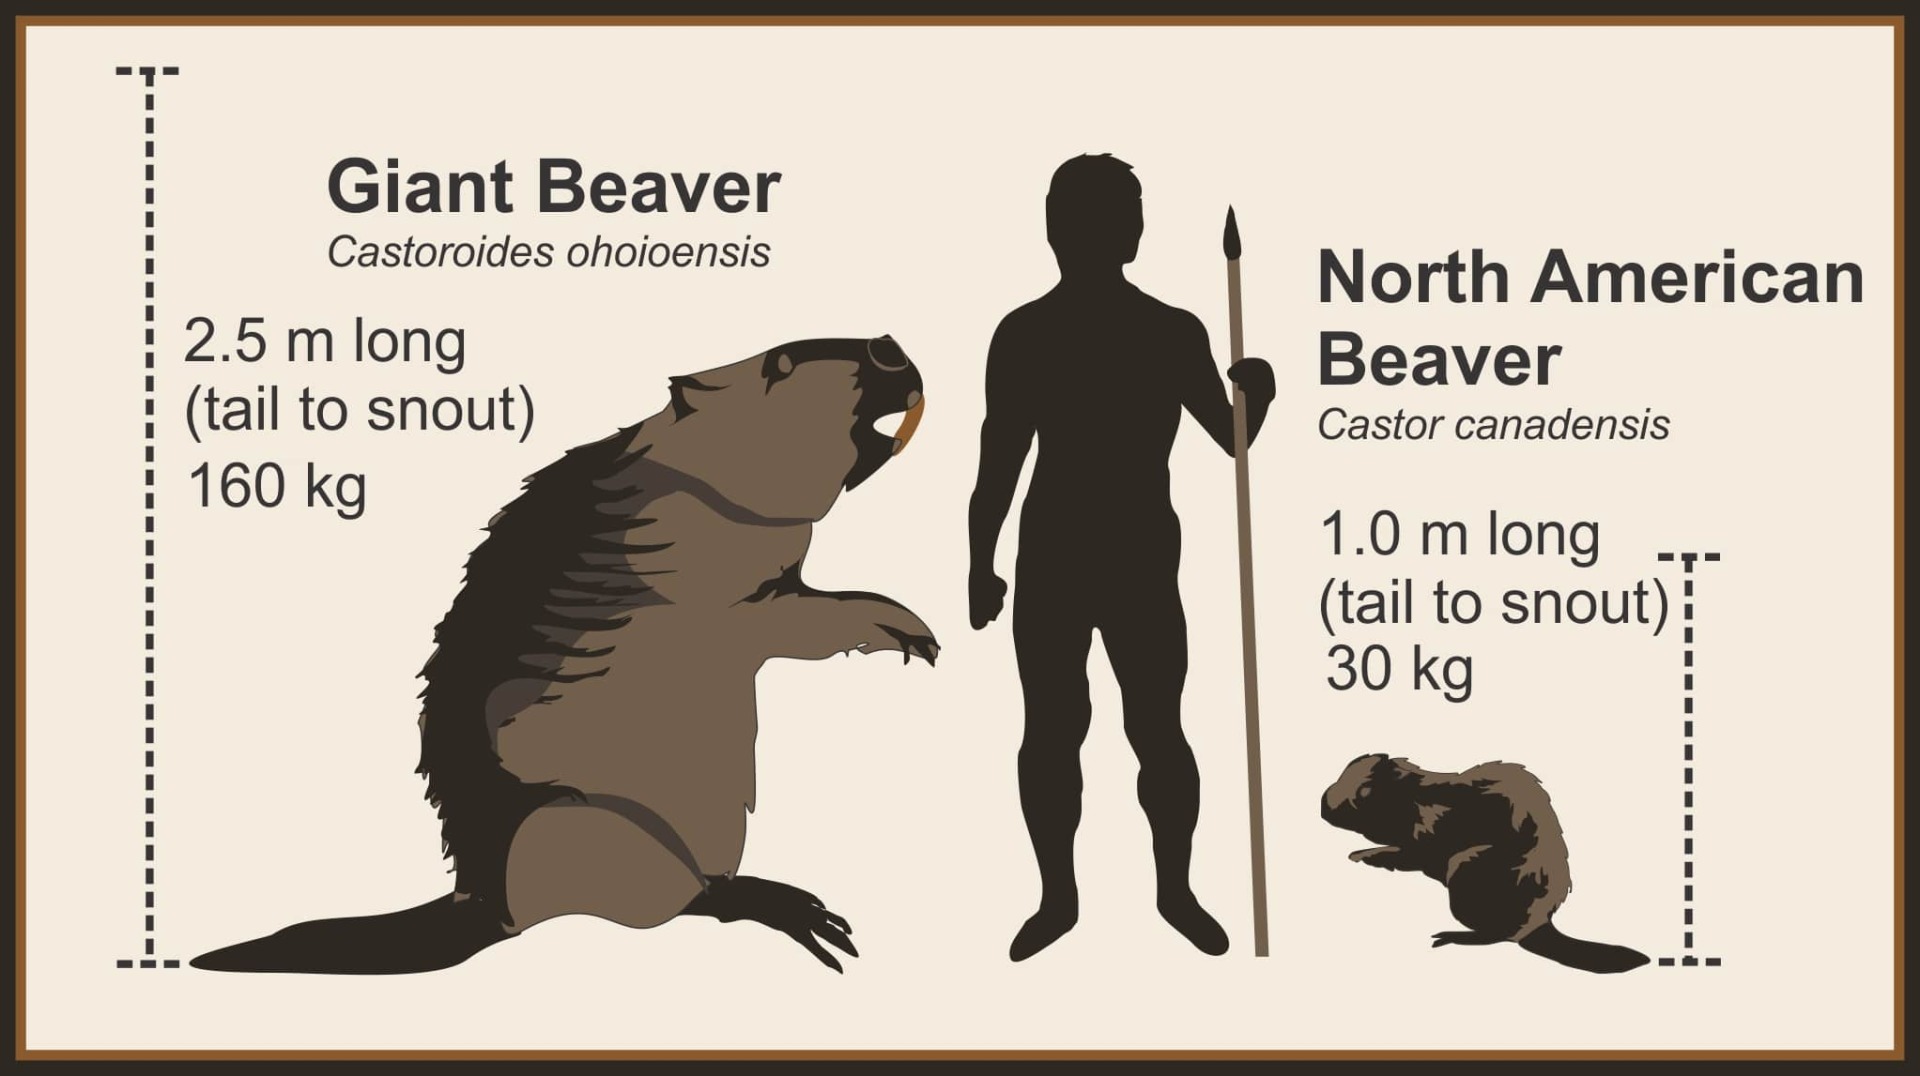 Beaver size comparison by Todd Kristensen.